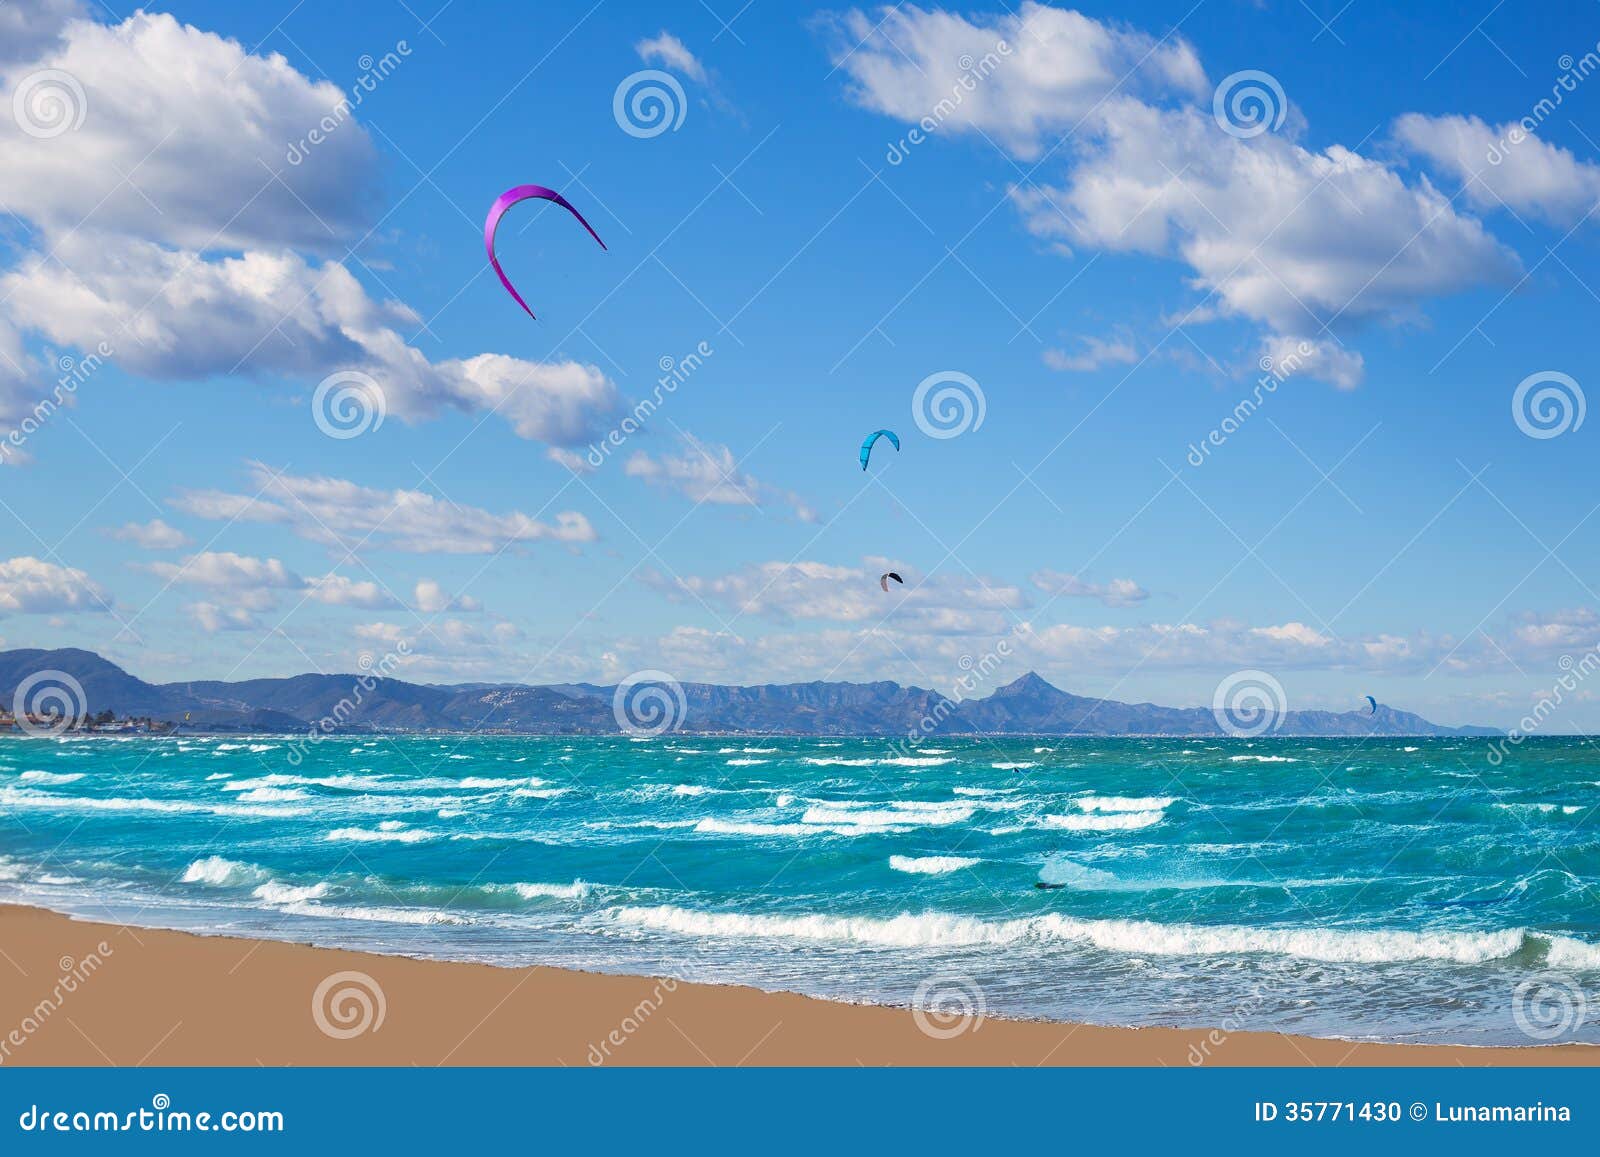 kite surf in denia oliva gandia in valencian community